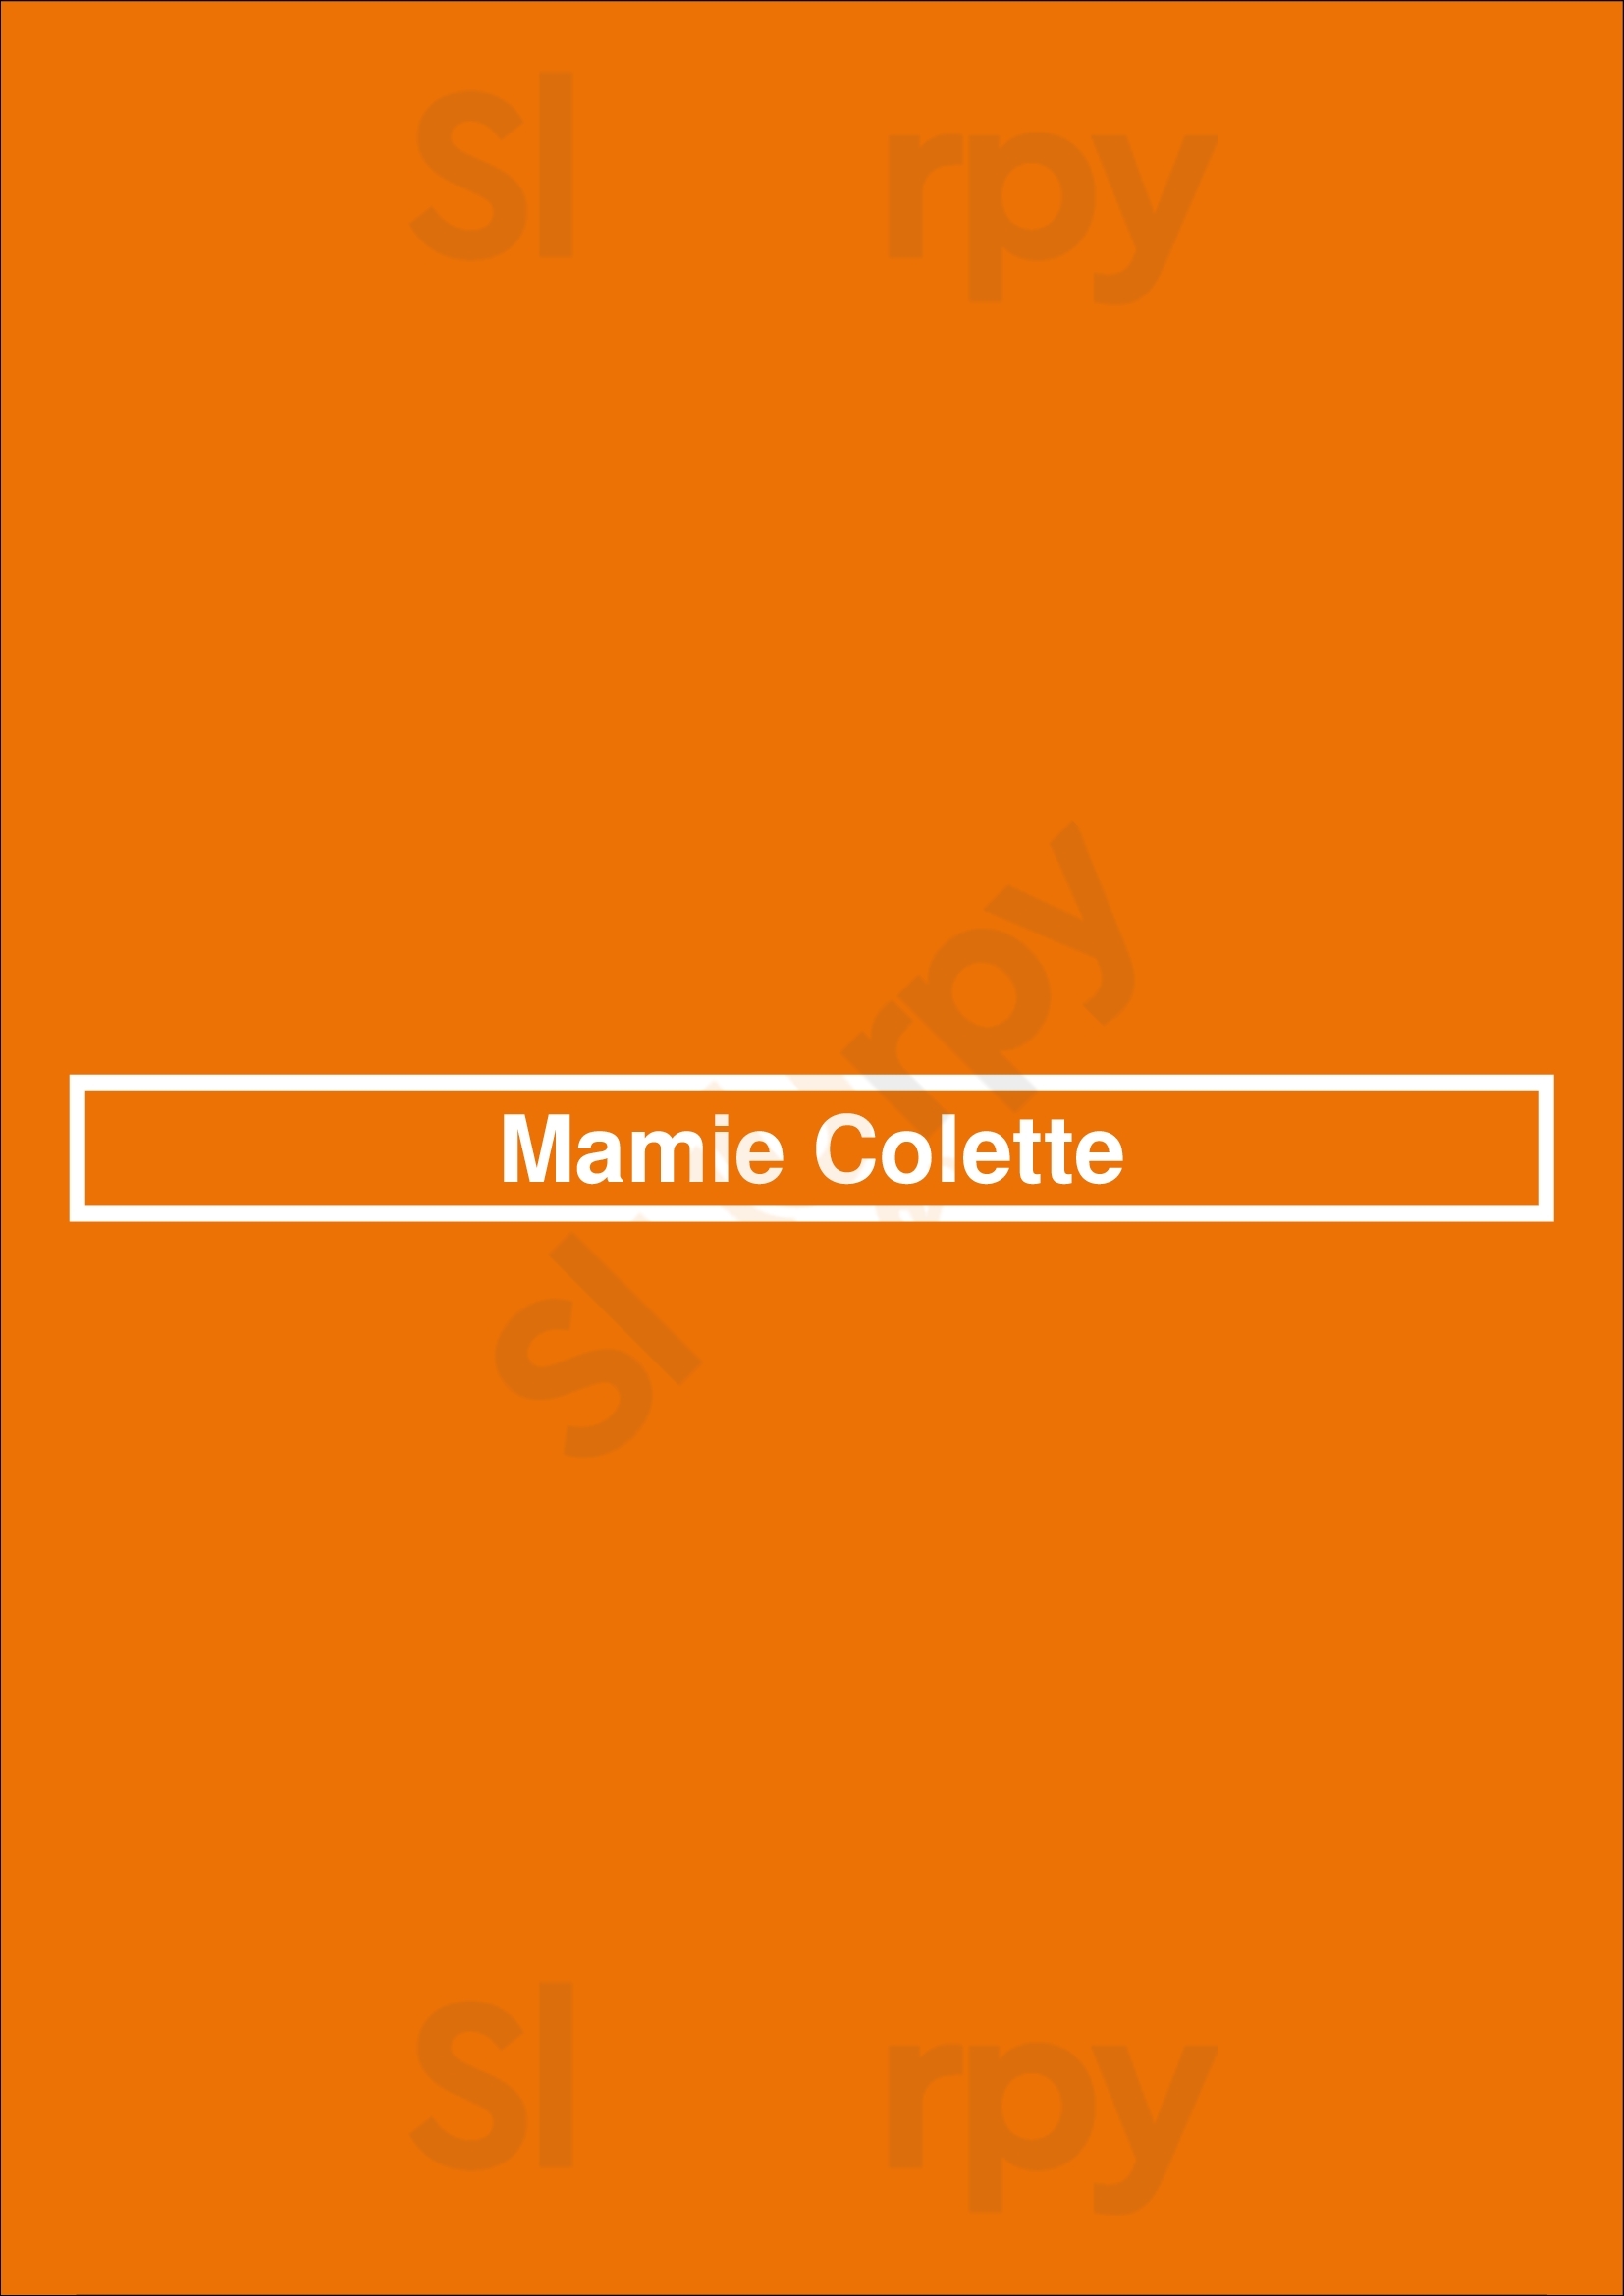 Mamie Colette Paris Menu - 1